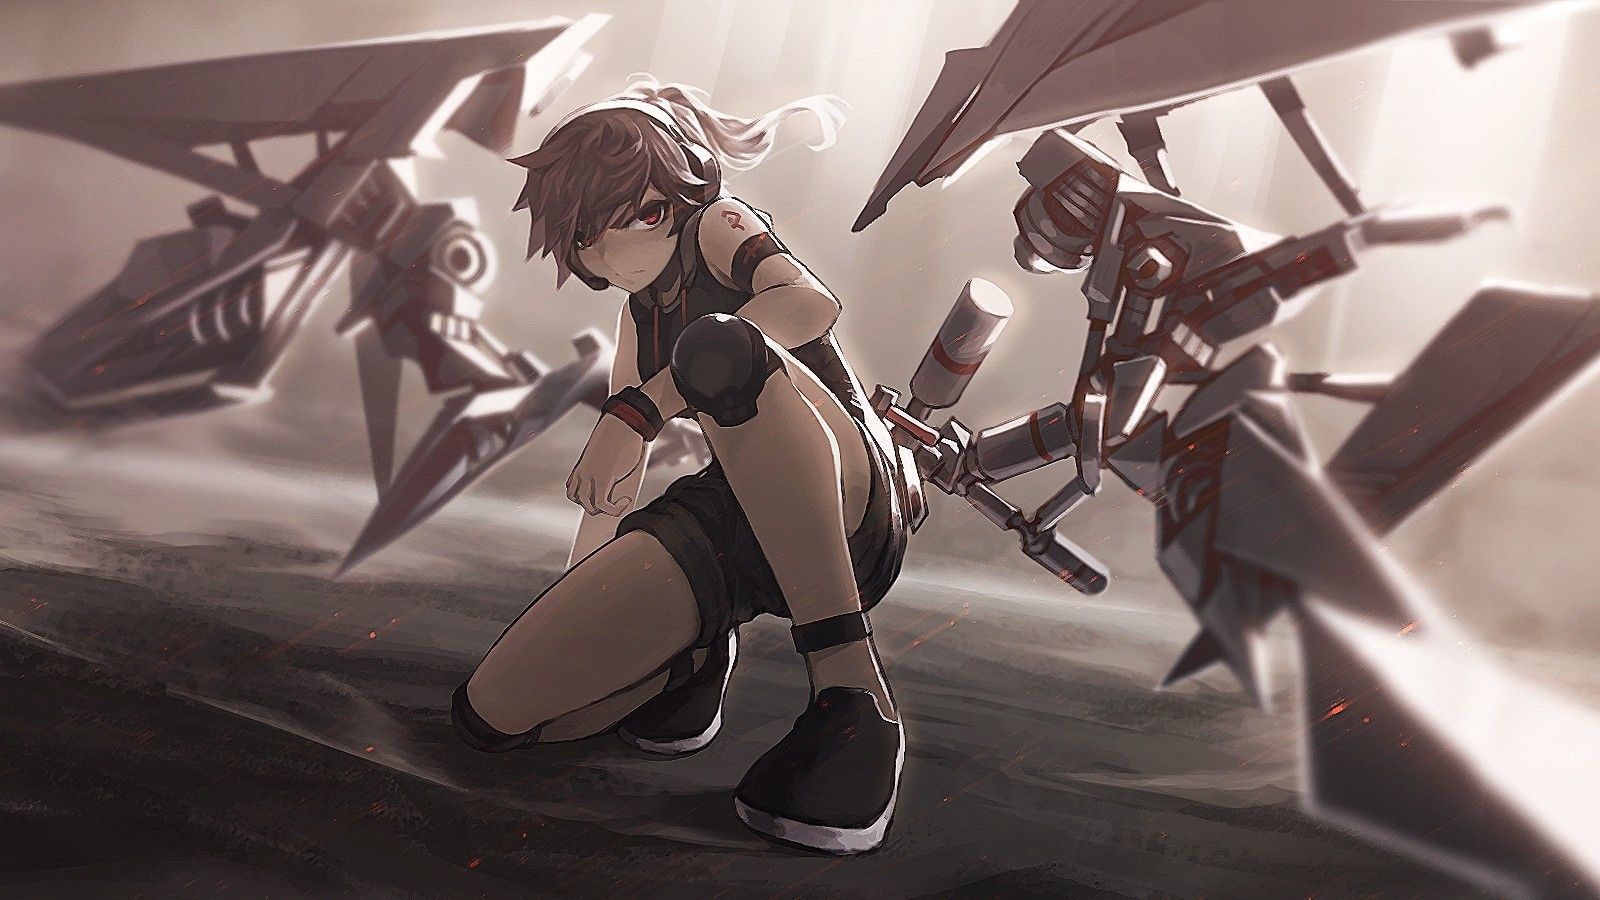 Download 1600x900 Anime Girl, Robots, Battle, Artwork Wallpaper